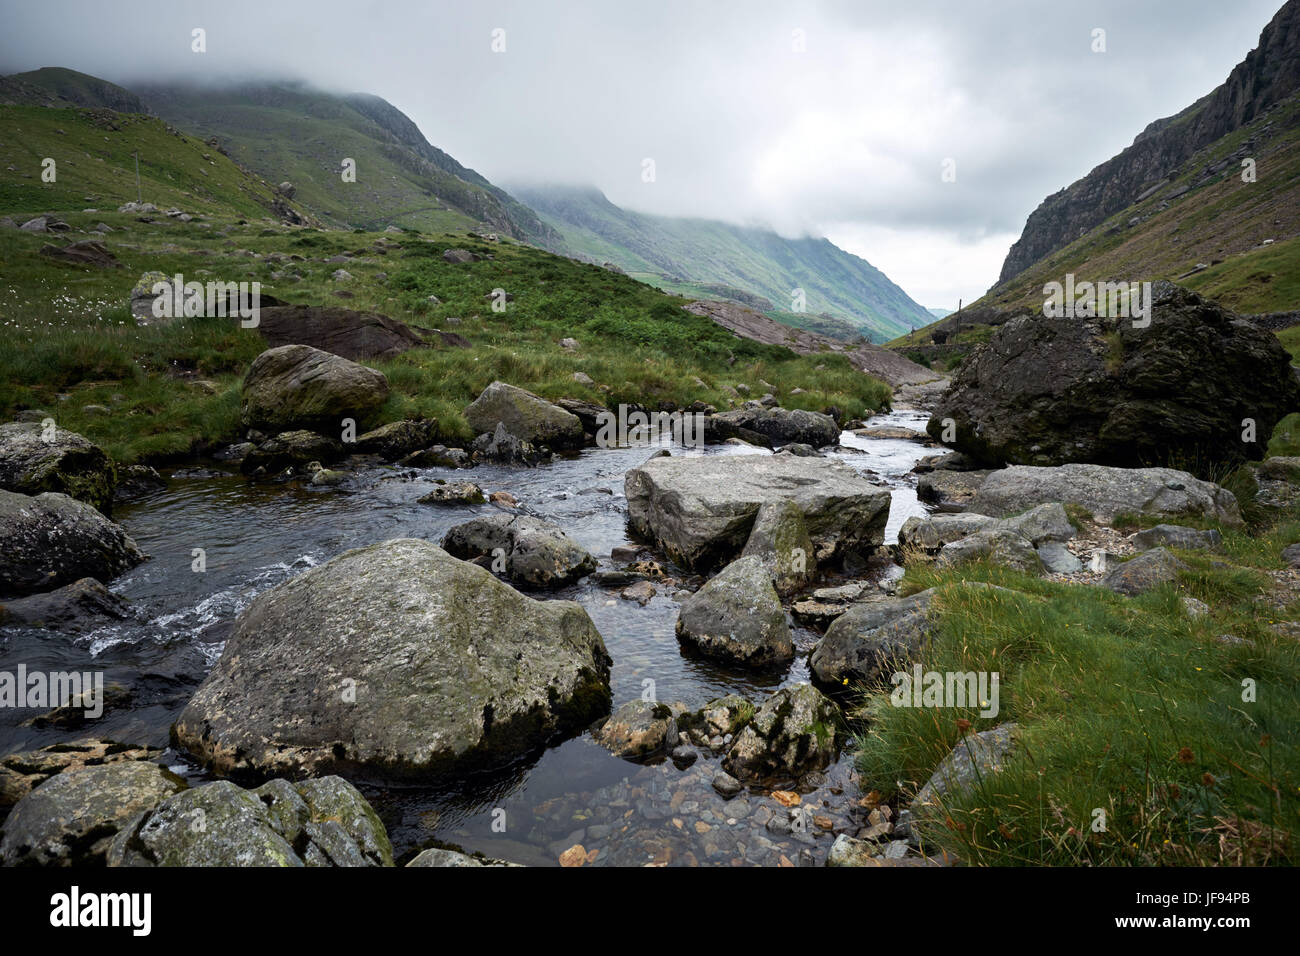 UK, Wales, Snowdonia, Pass of Llanberis, Pont, y, Gromlech, Afon Nant Peris, stream flowing through valley Stock Photo